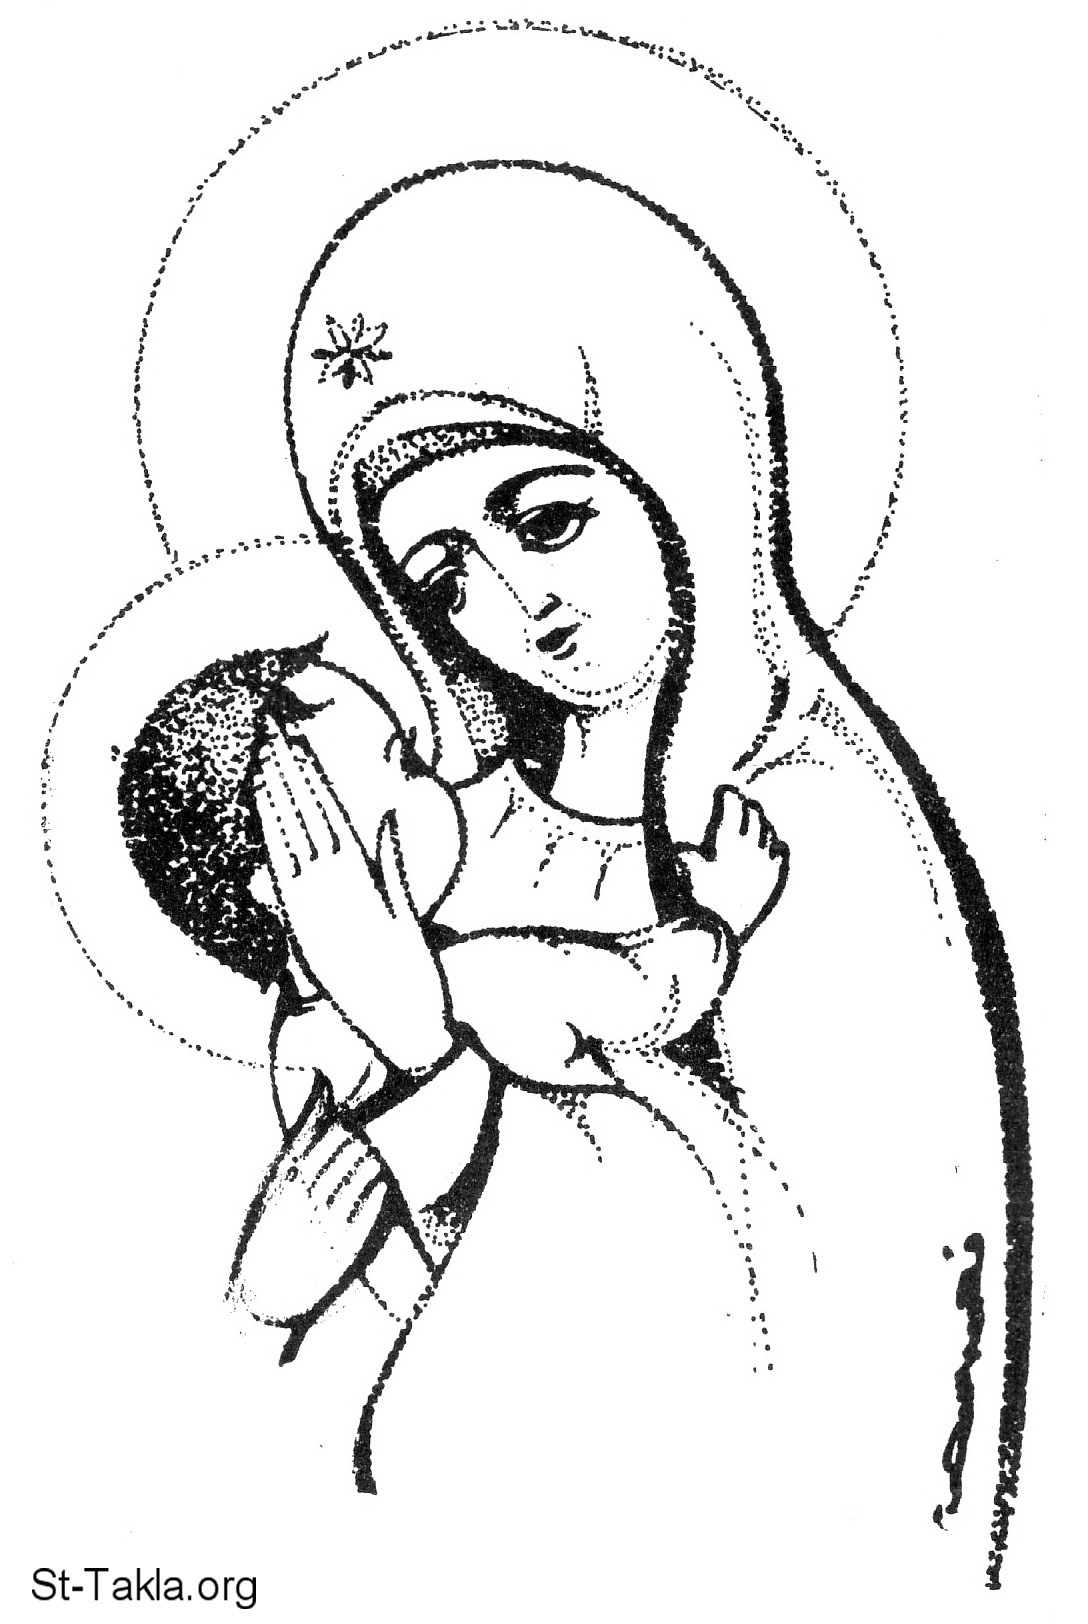 St-Takla.org Image: Saint Virgin Mary Mother of Jesus, by Fahmy Eshak صورة في موقع الأنبا تكلا: القديسة مريم العذراء والدة السيد يسوع المسيح، رسم الفنان فهمي إسحق